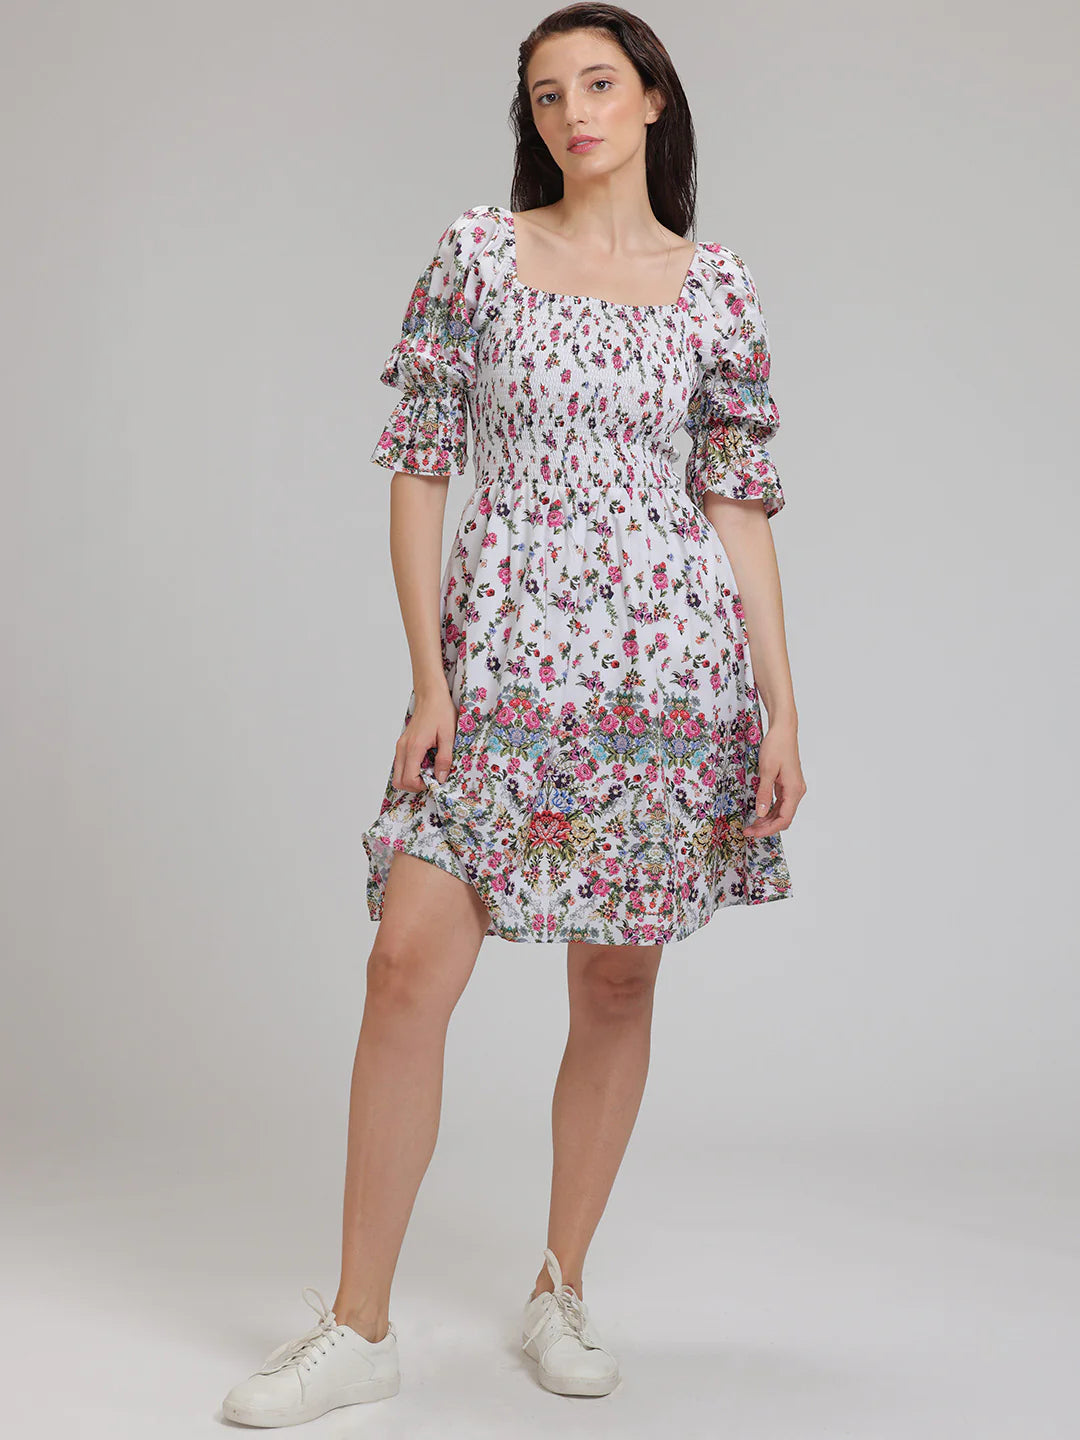 Sleeve Cutout Dress for Women | Puff Sleeve Cutout Charm Dress